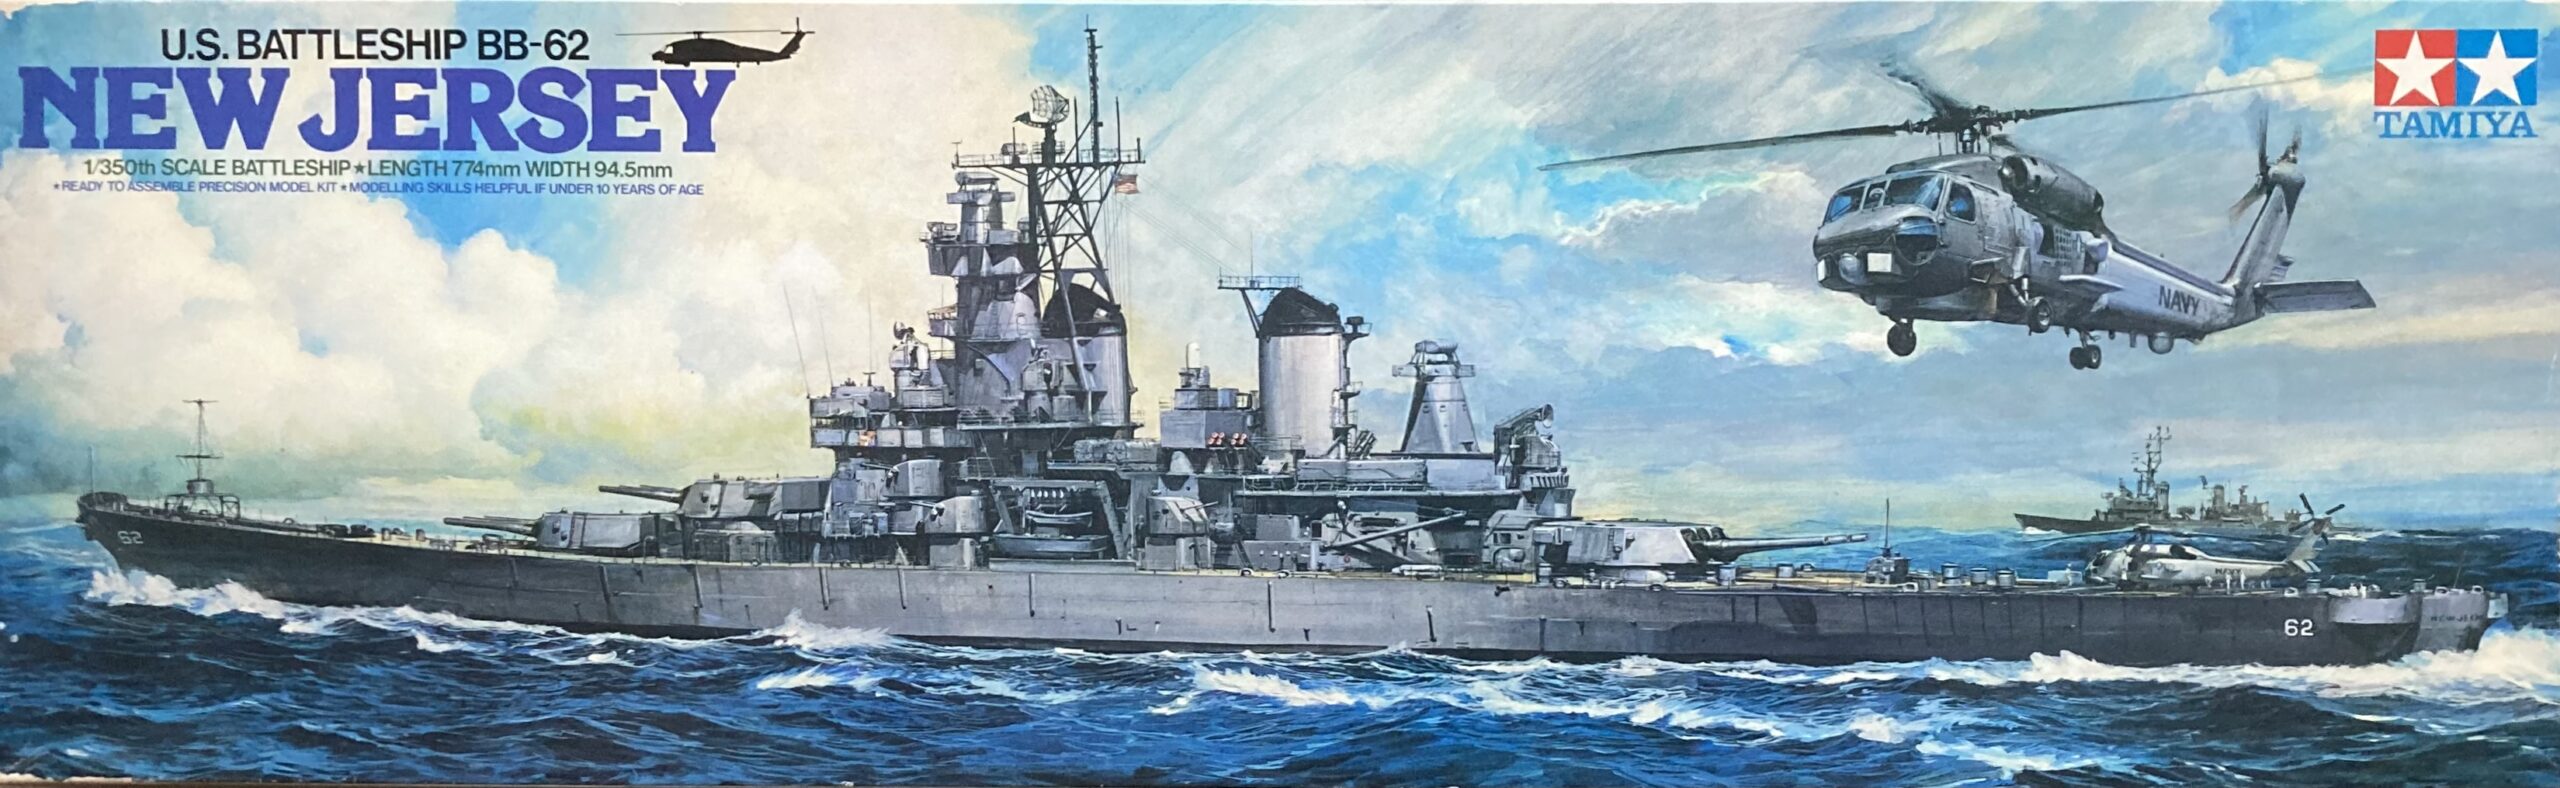 BB-62 USS New Jersey